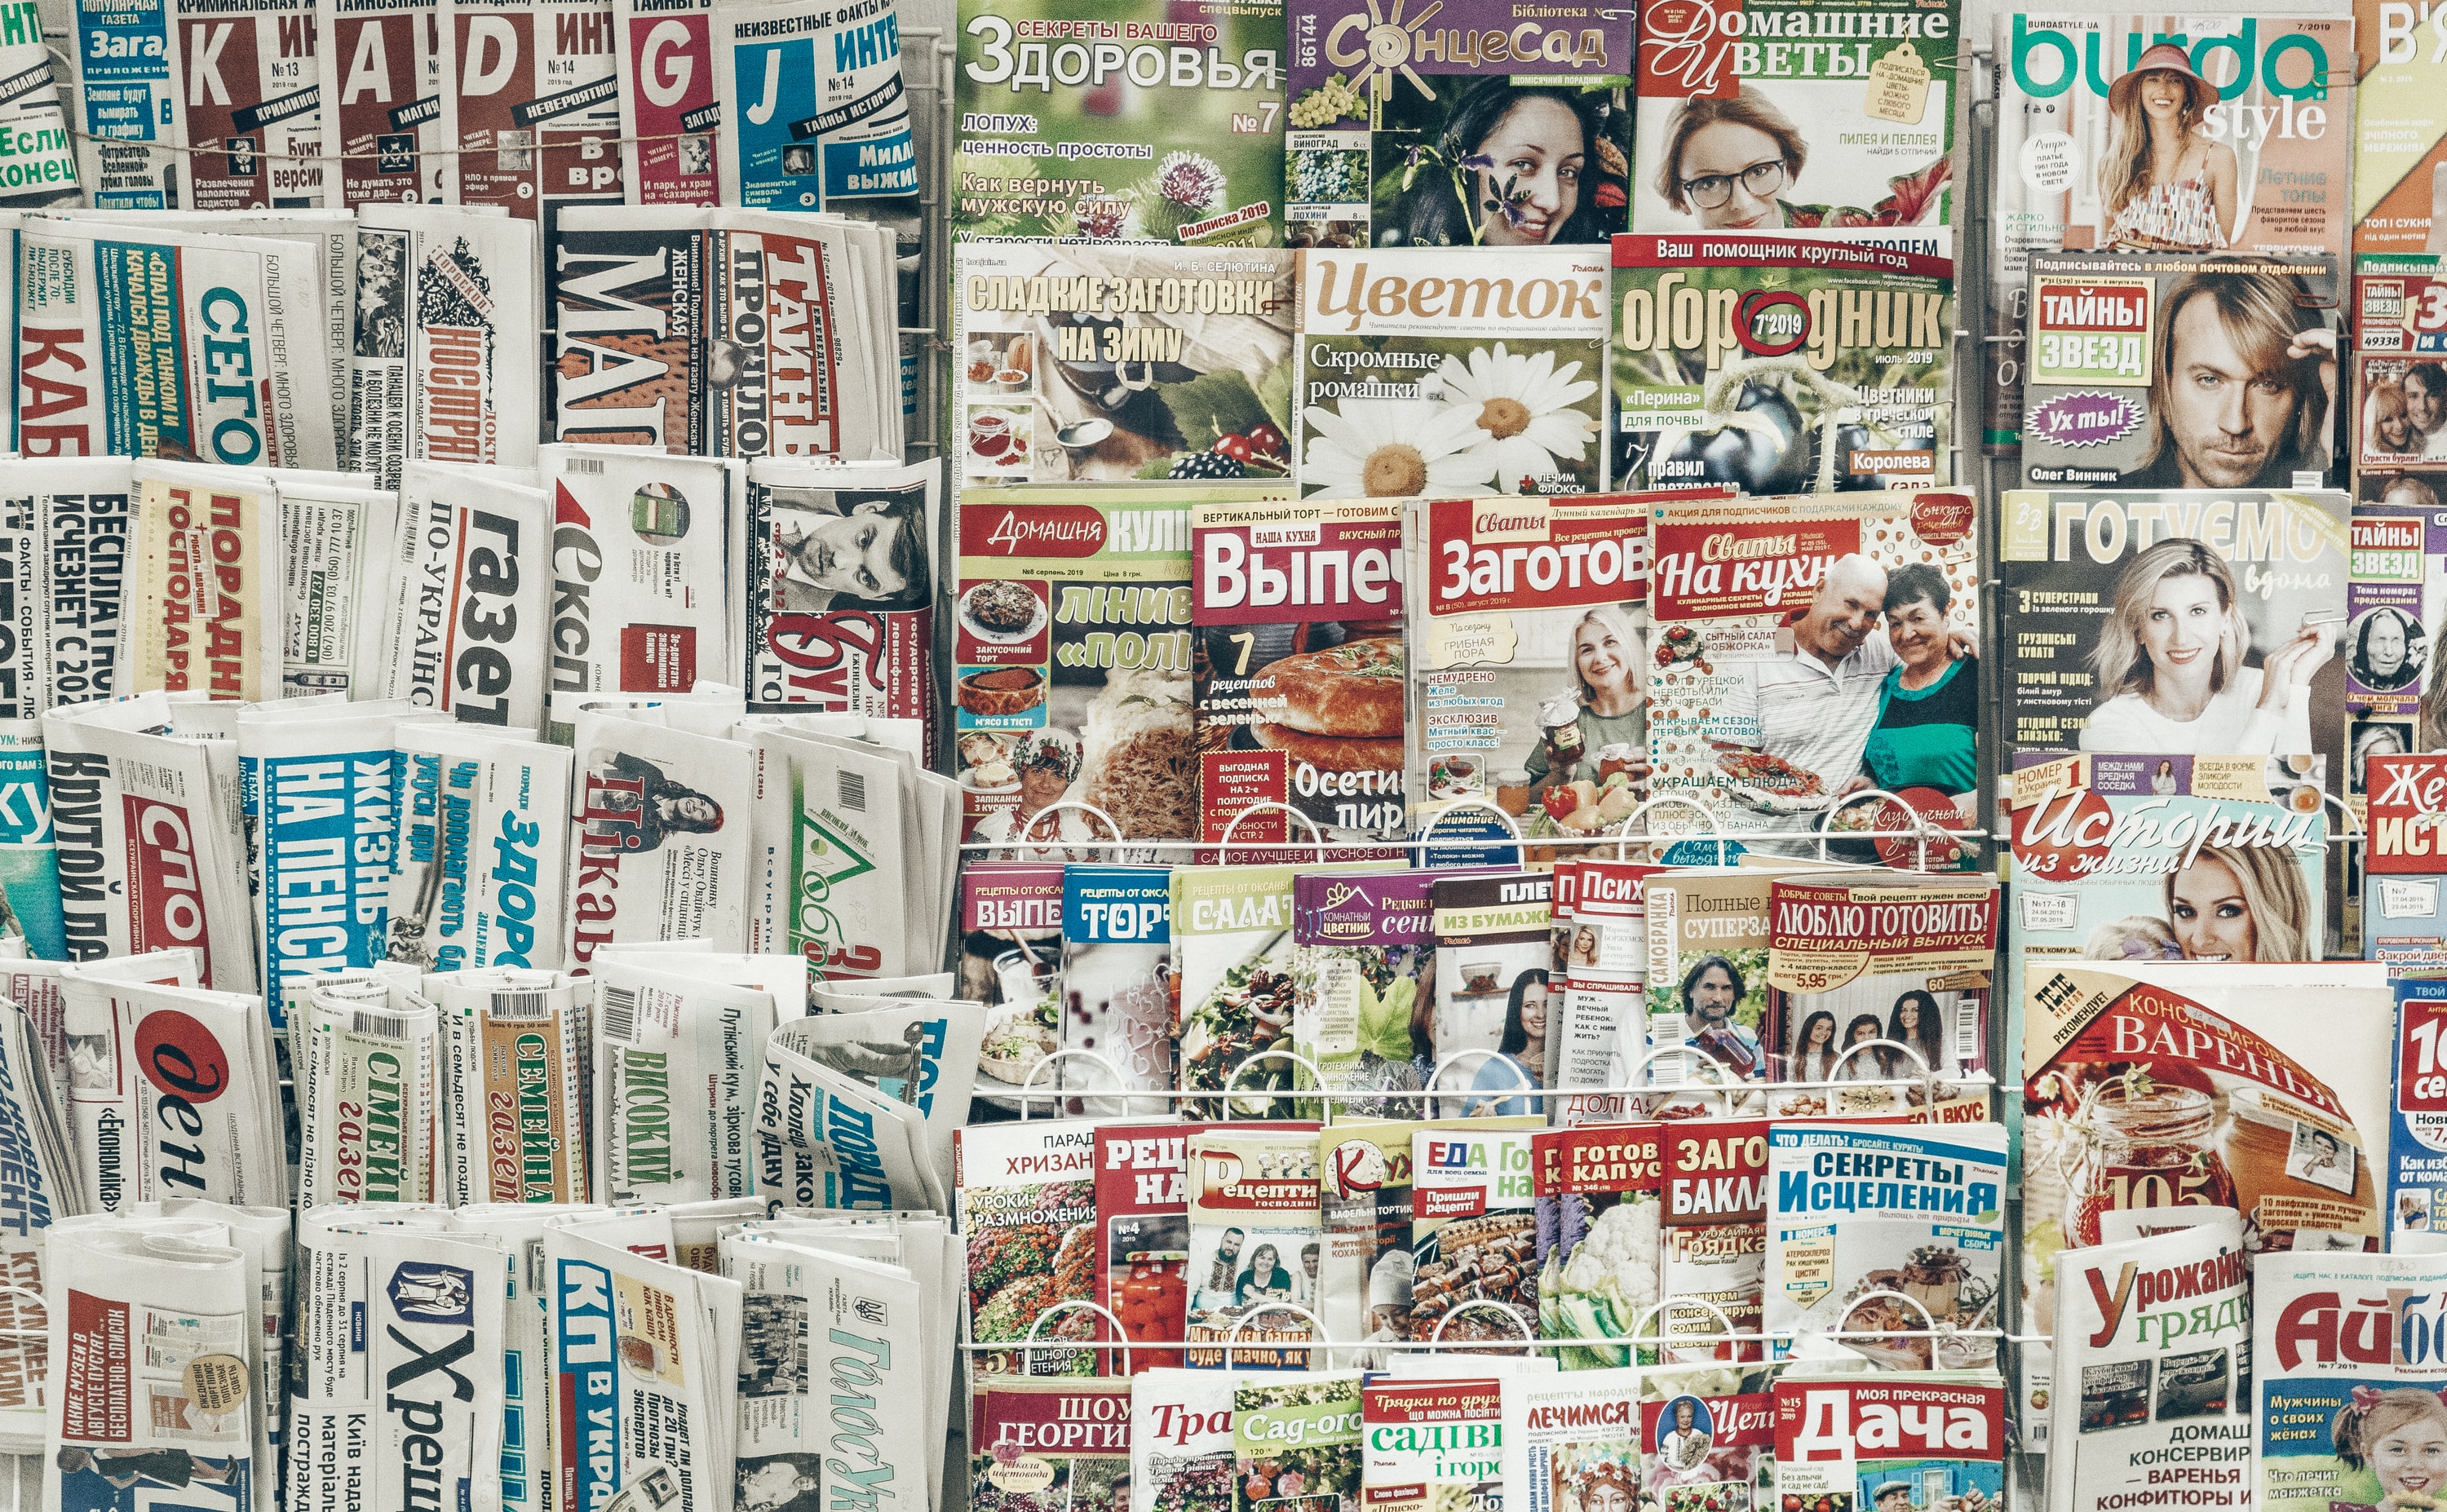 A magazine stand in Kiev, Ukraine.